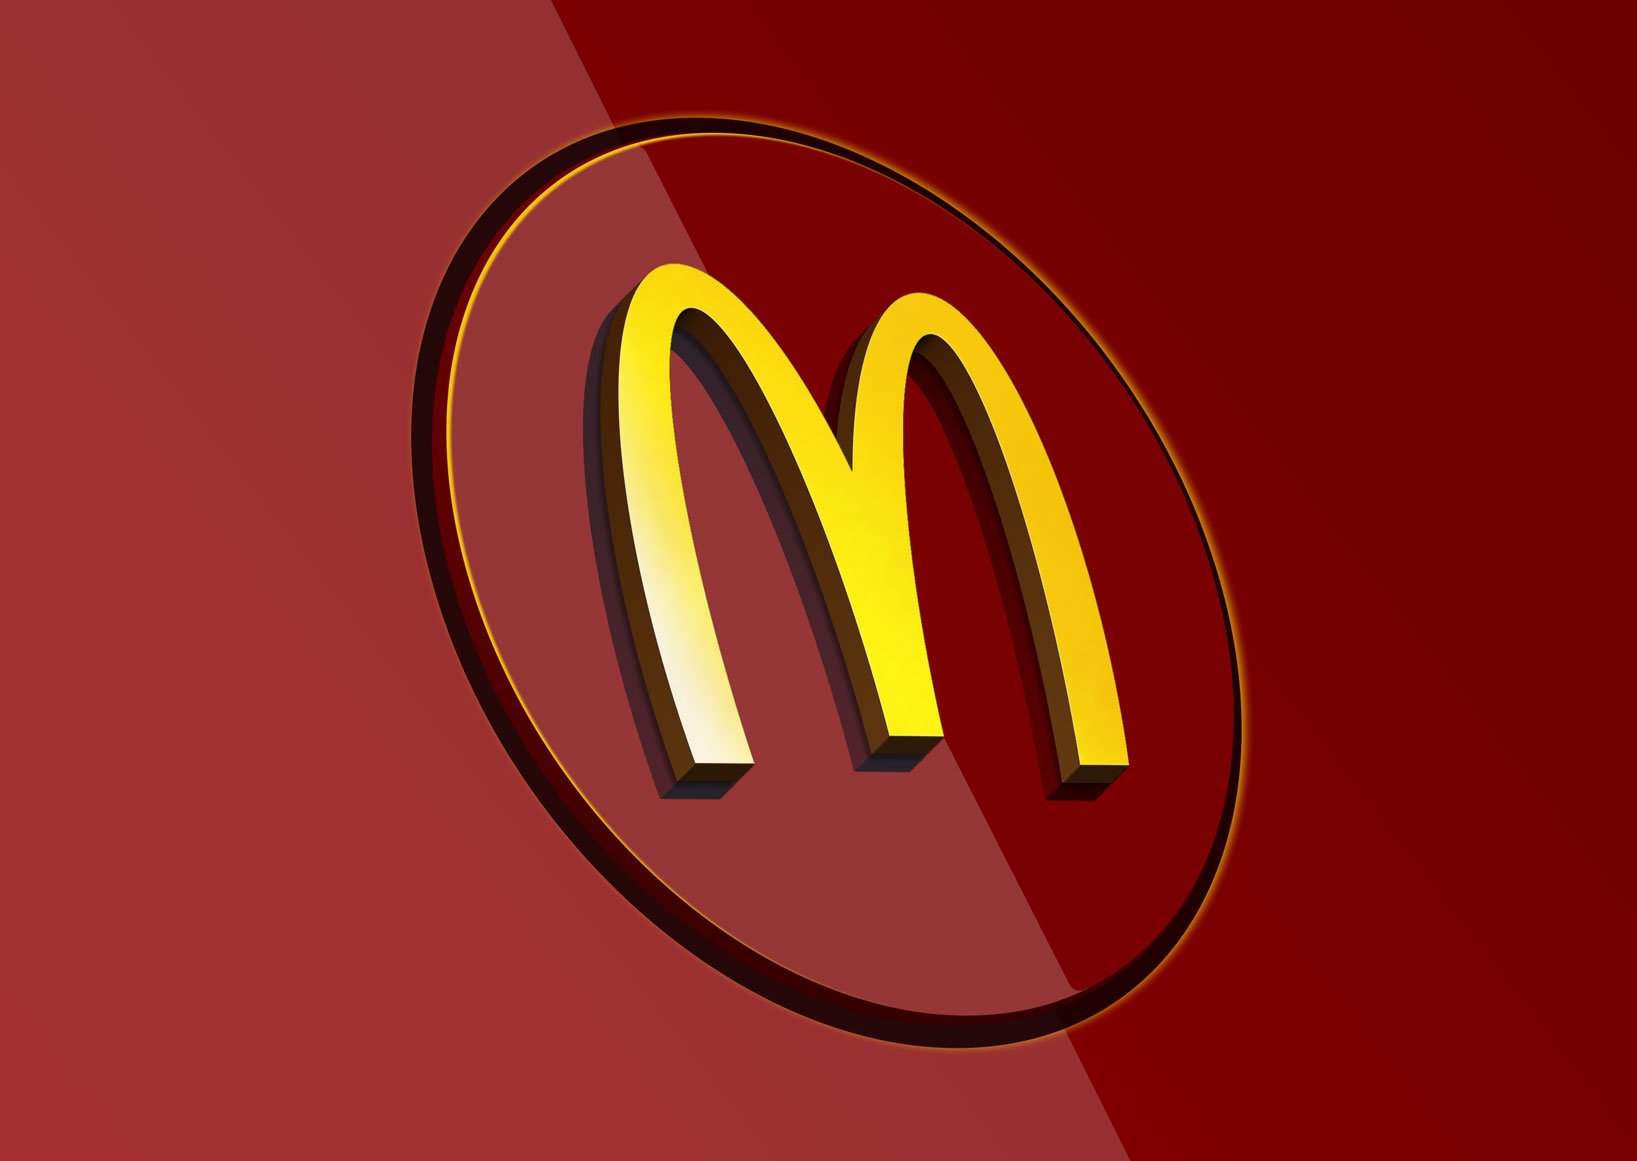 Download Free 3D Logo Mockup PSD | Designbolts